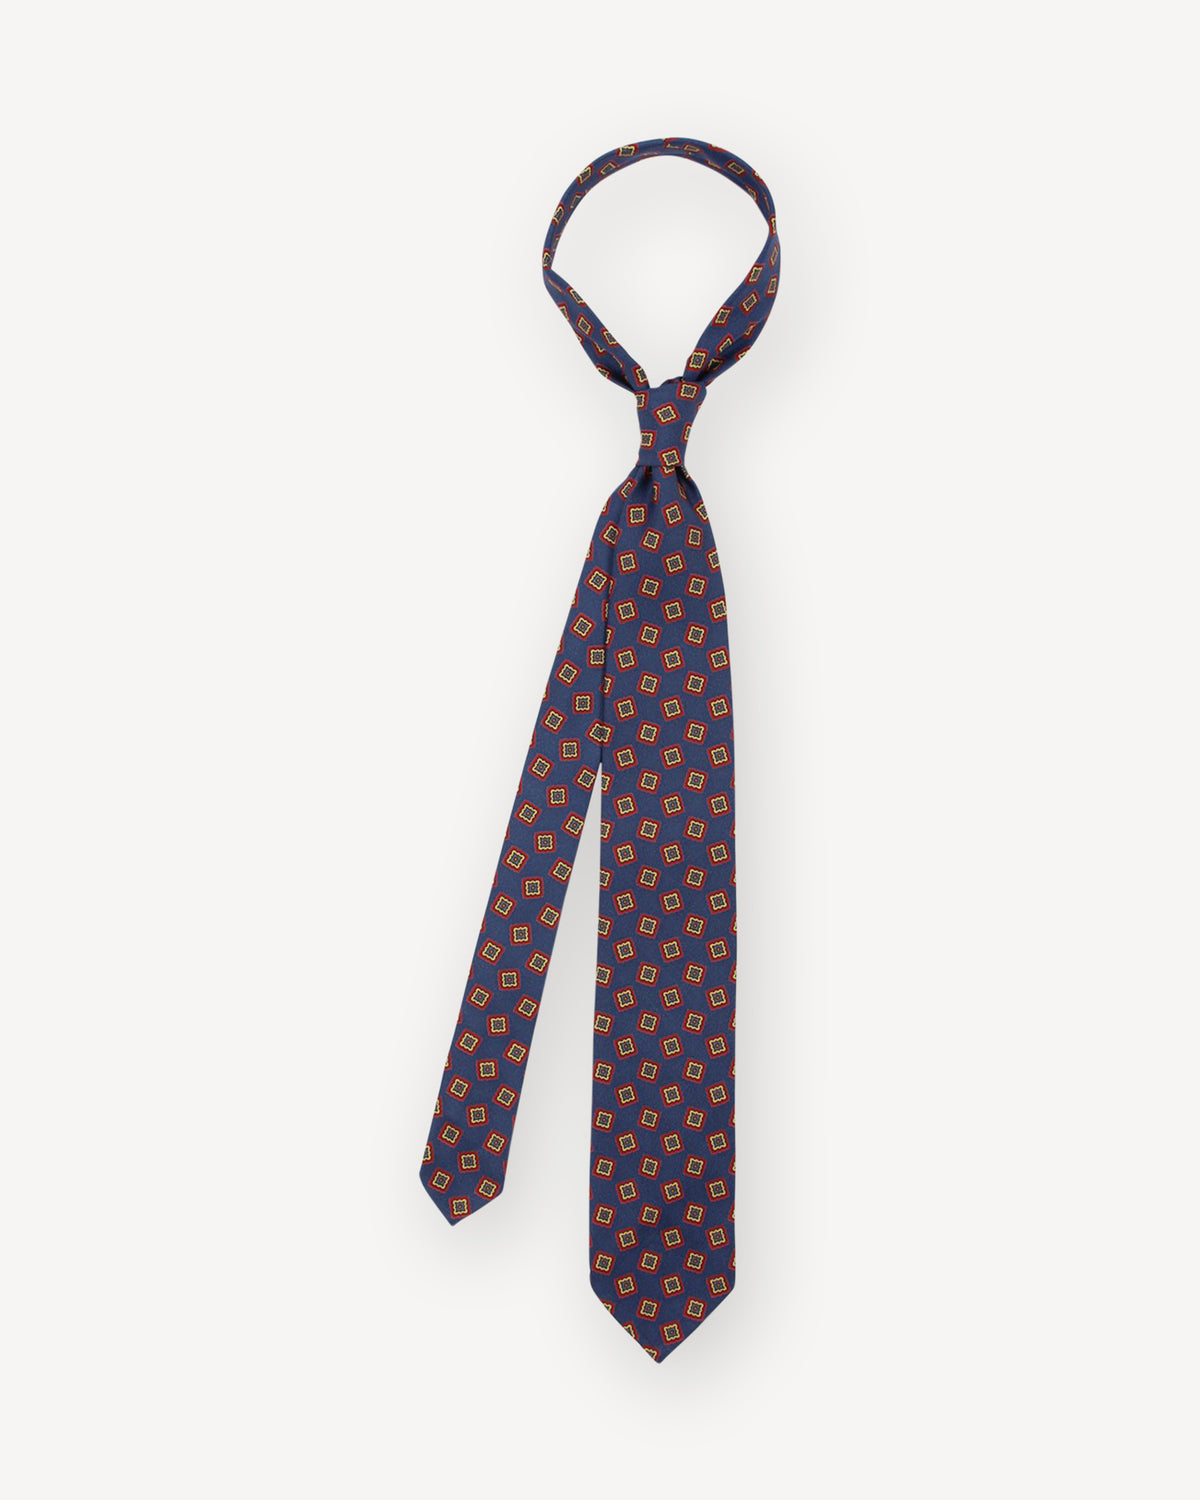 Neckwear | Handmade Ties & Bowties